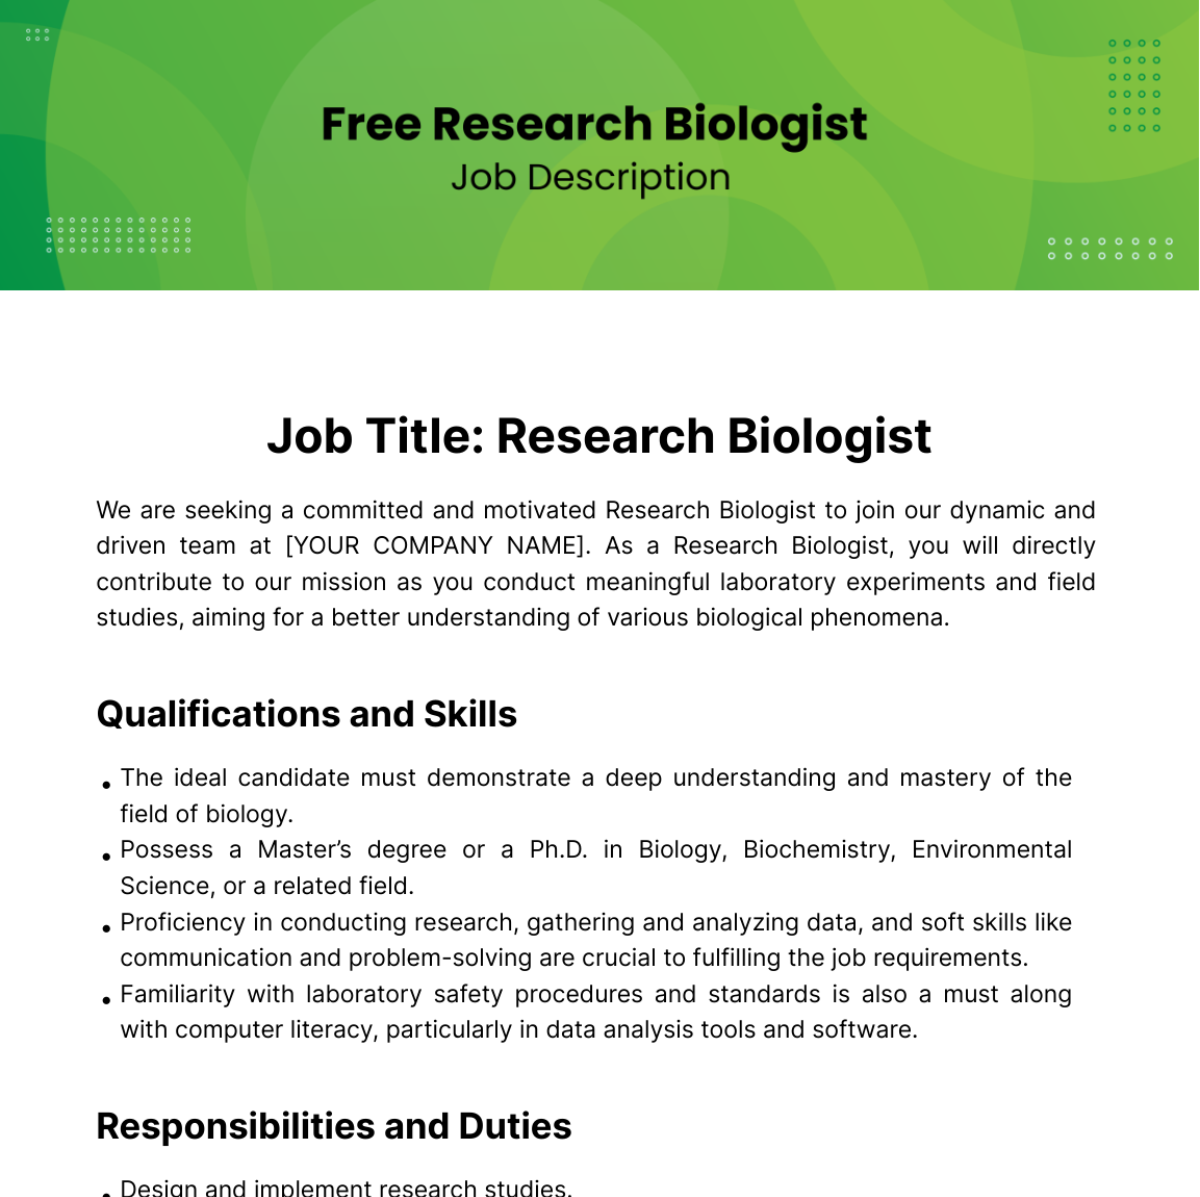 Research Biologist Job Description Template